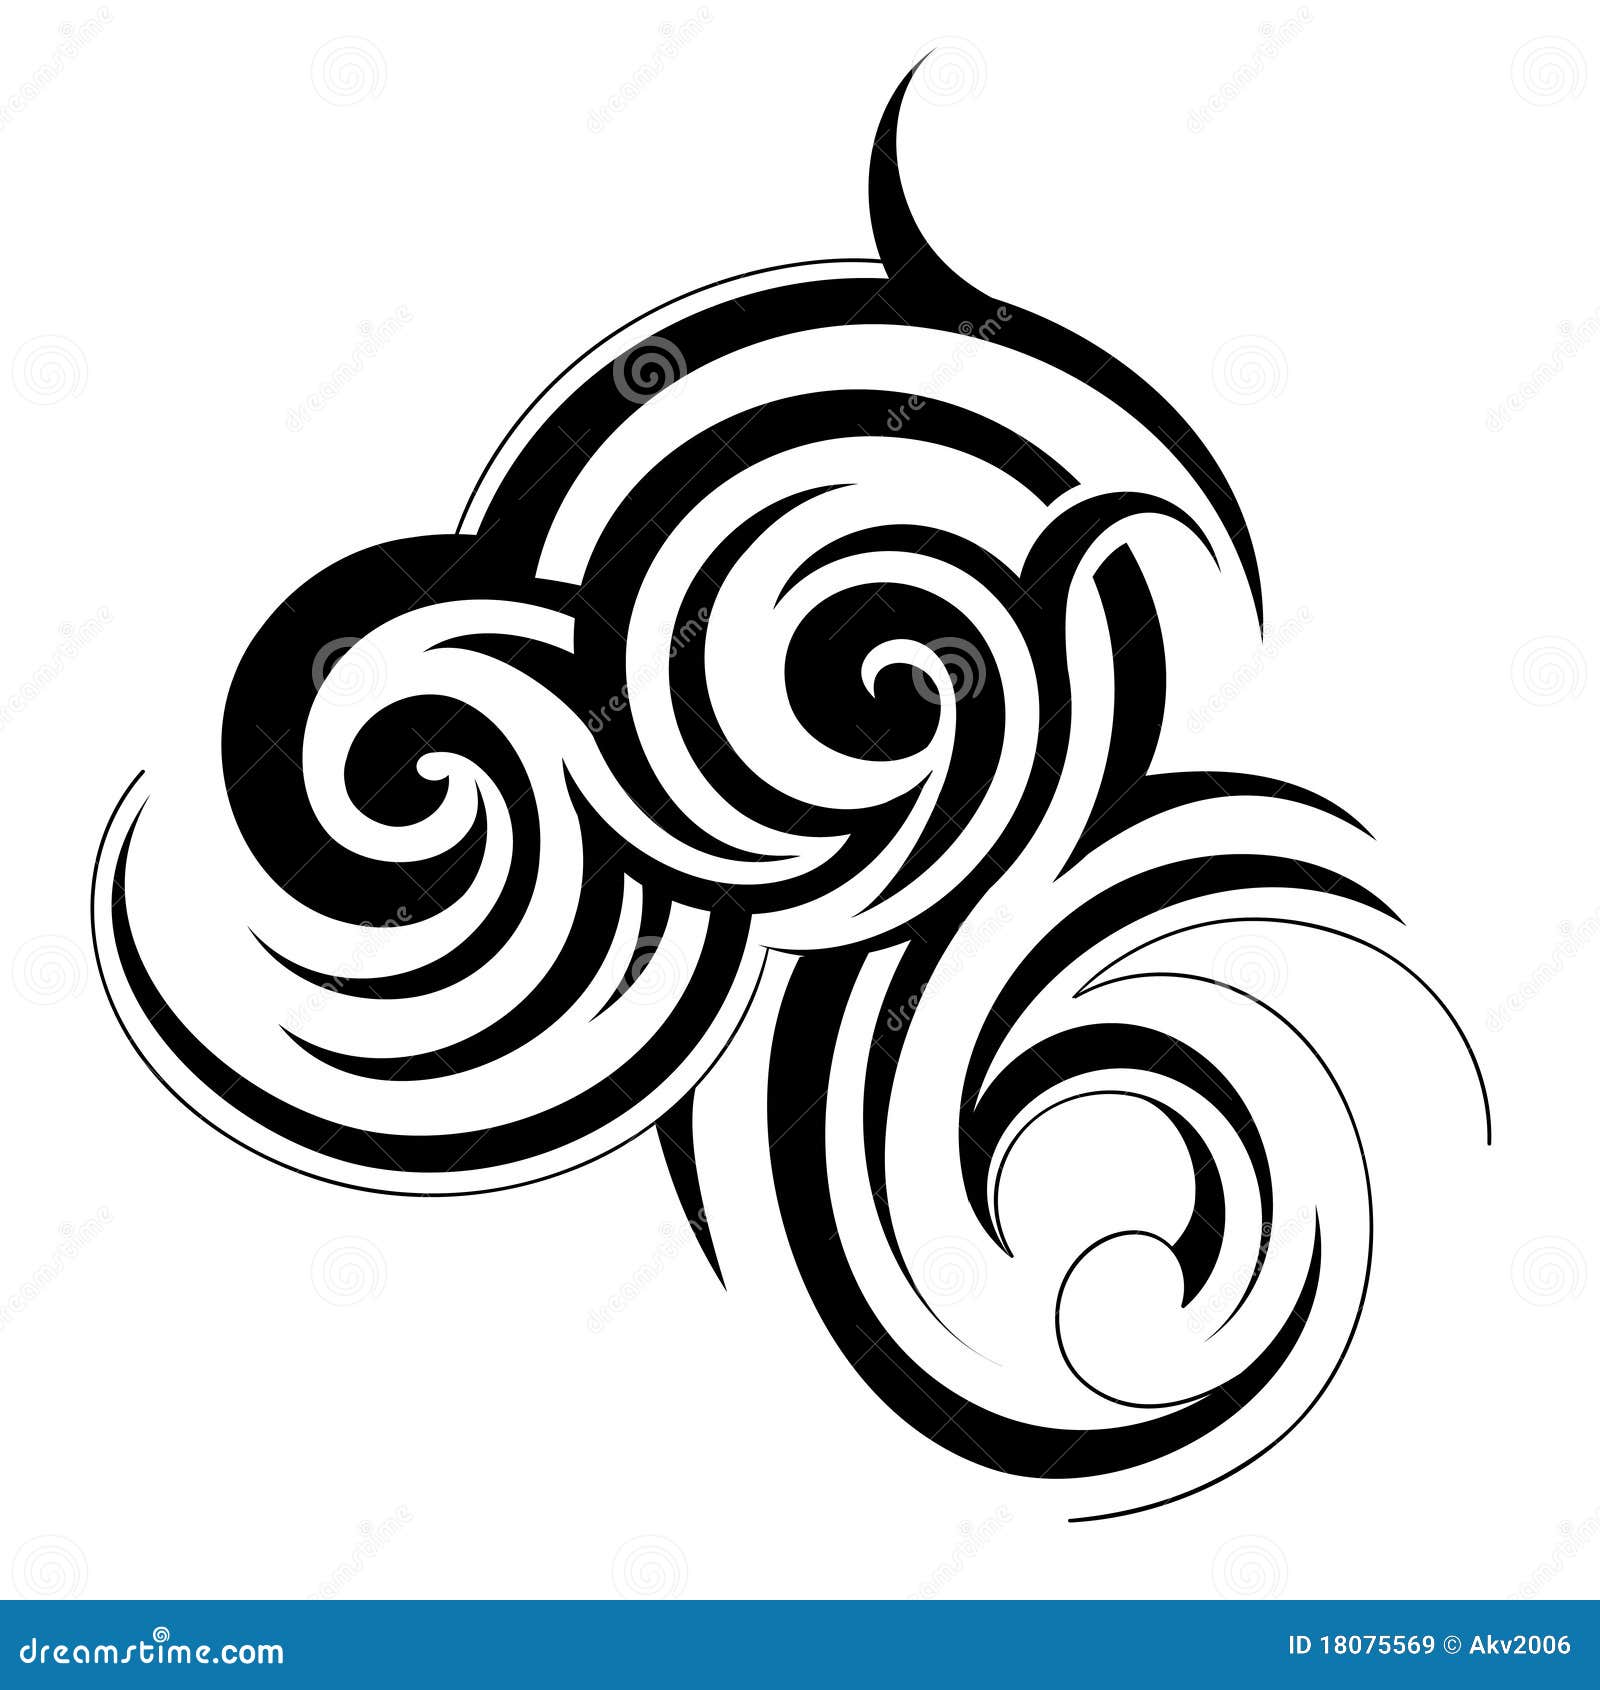 Tribal swirl tattoos designs